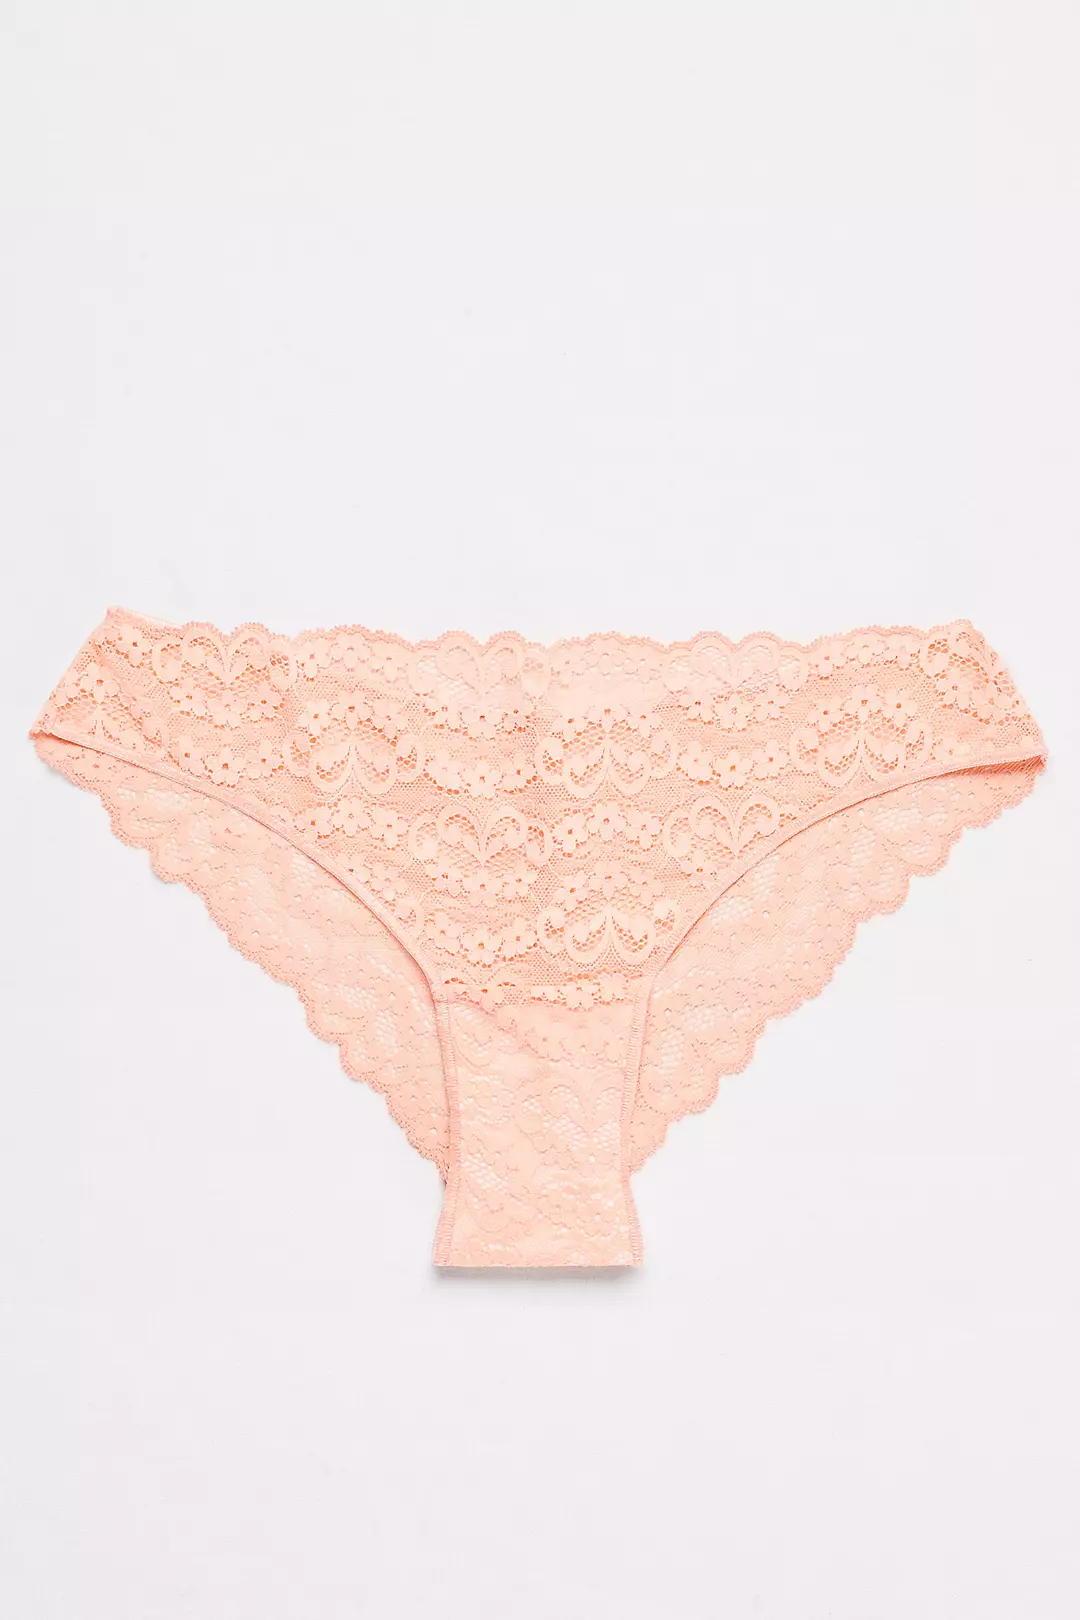 Fiorentina Scalloped Lace Panty Image